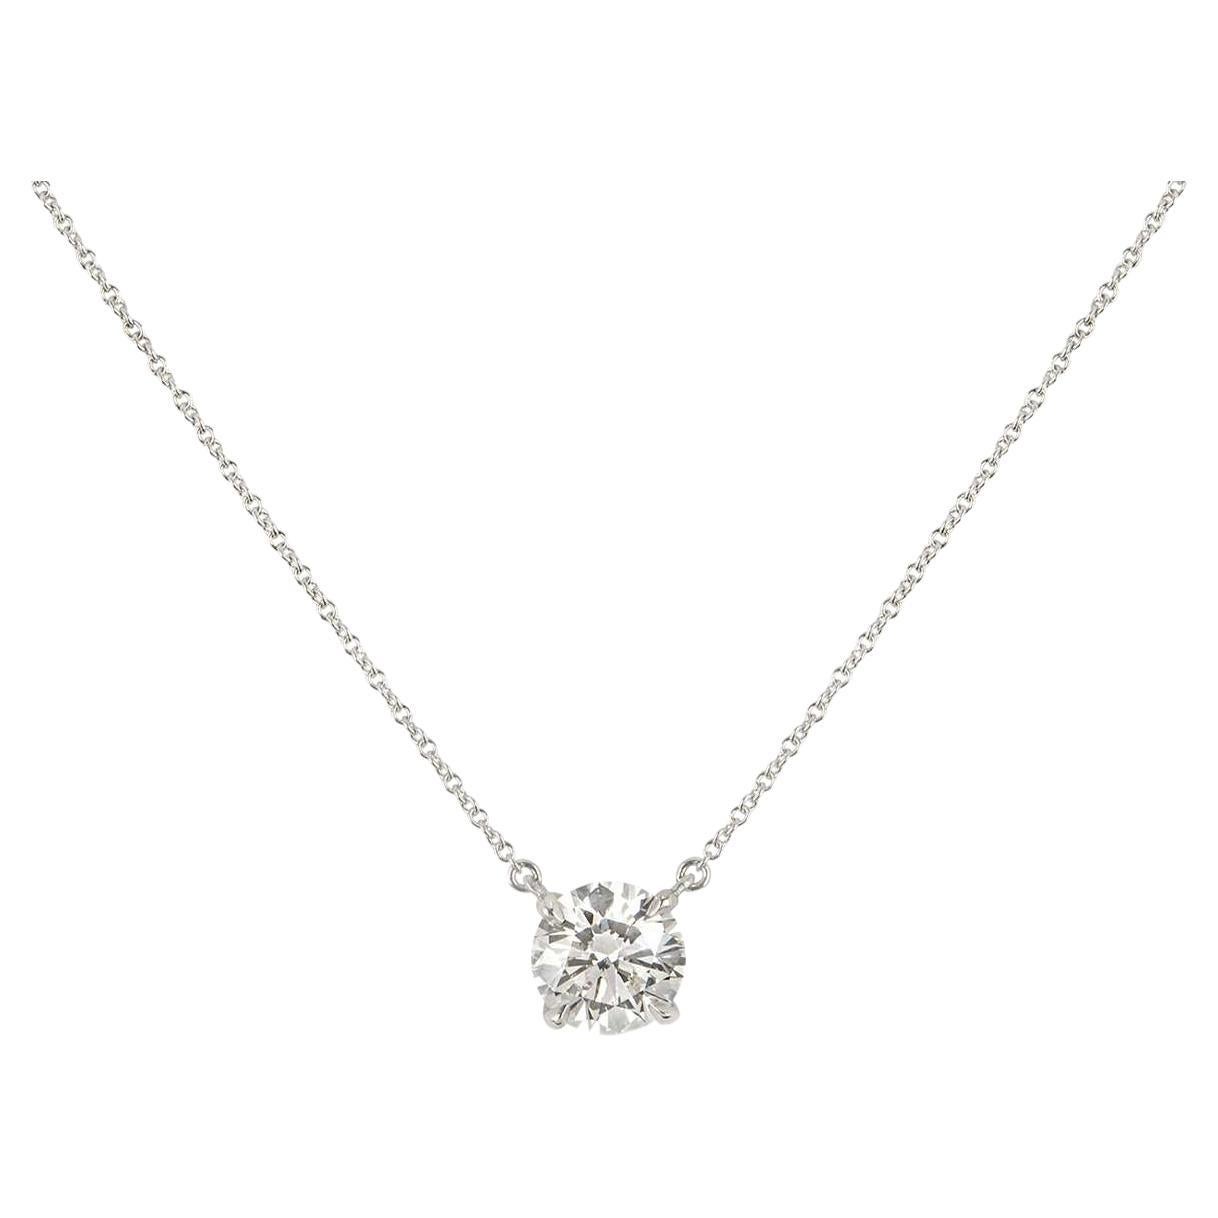 Tiffany & Co. Platinum Diamond Solitaire Pendant 2.01 Carat F/VS1 GIA Certified